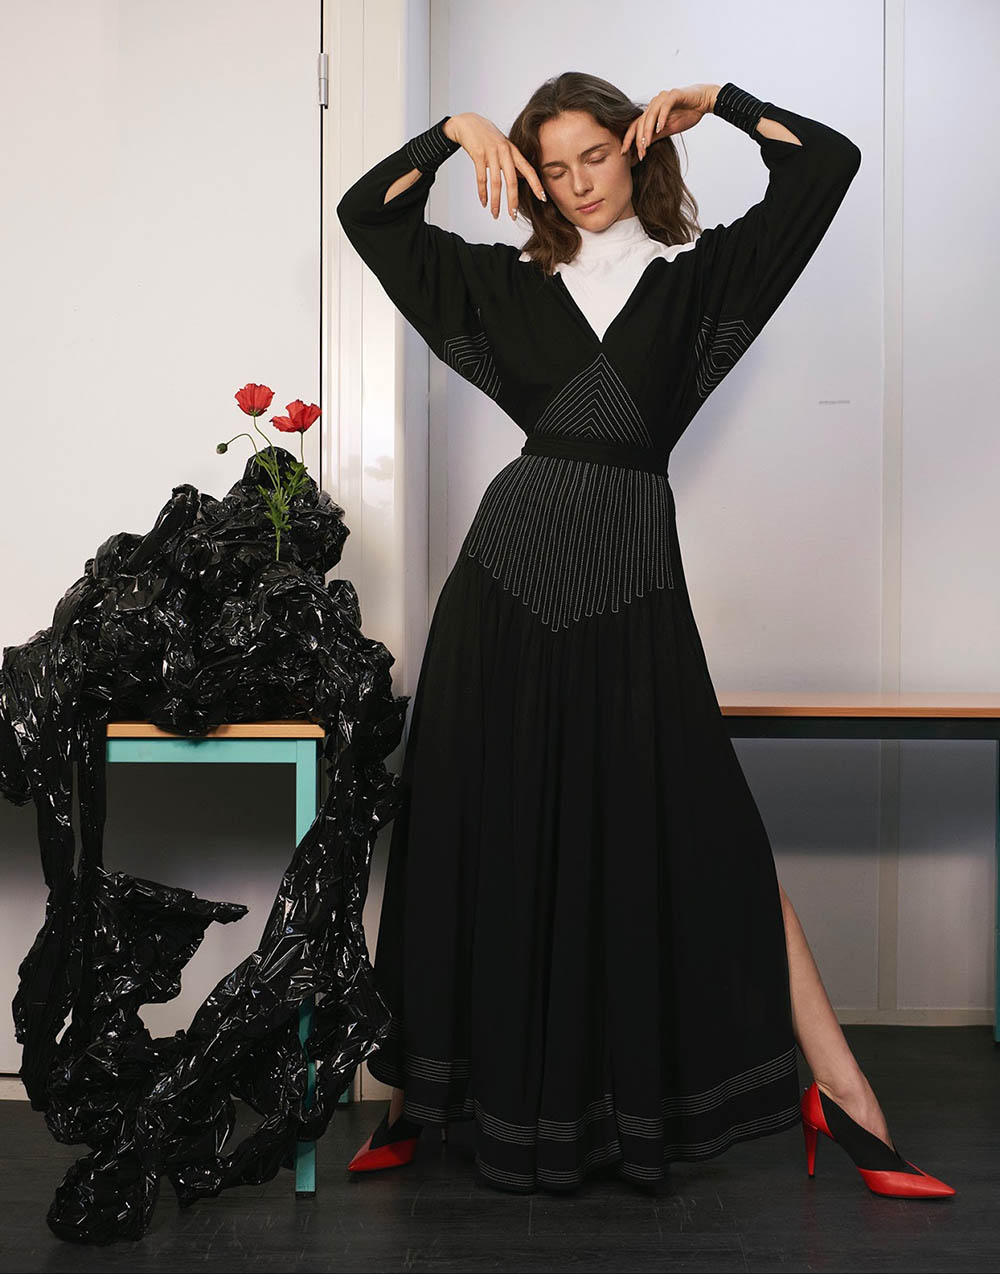 Anna de Rijk by Naomi Yang for Vogue Taiwan April 2019